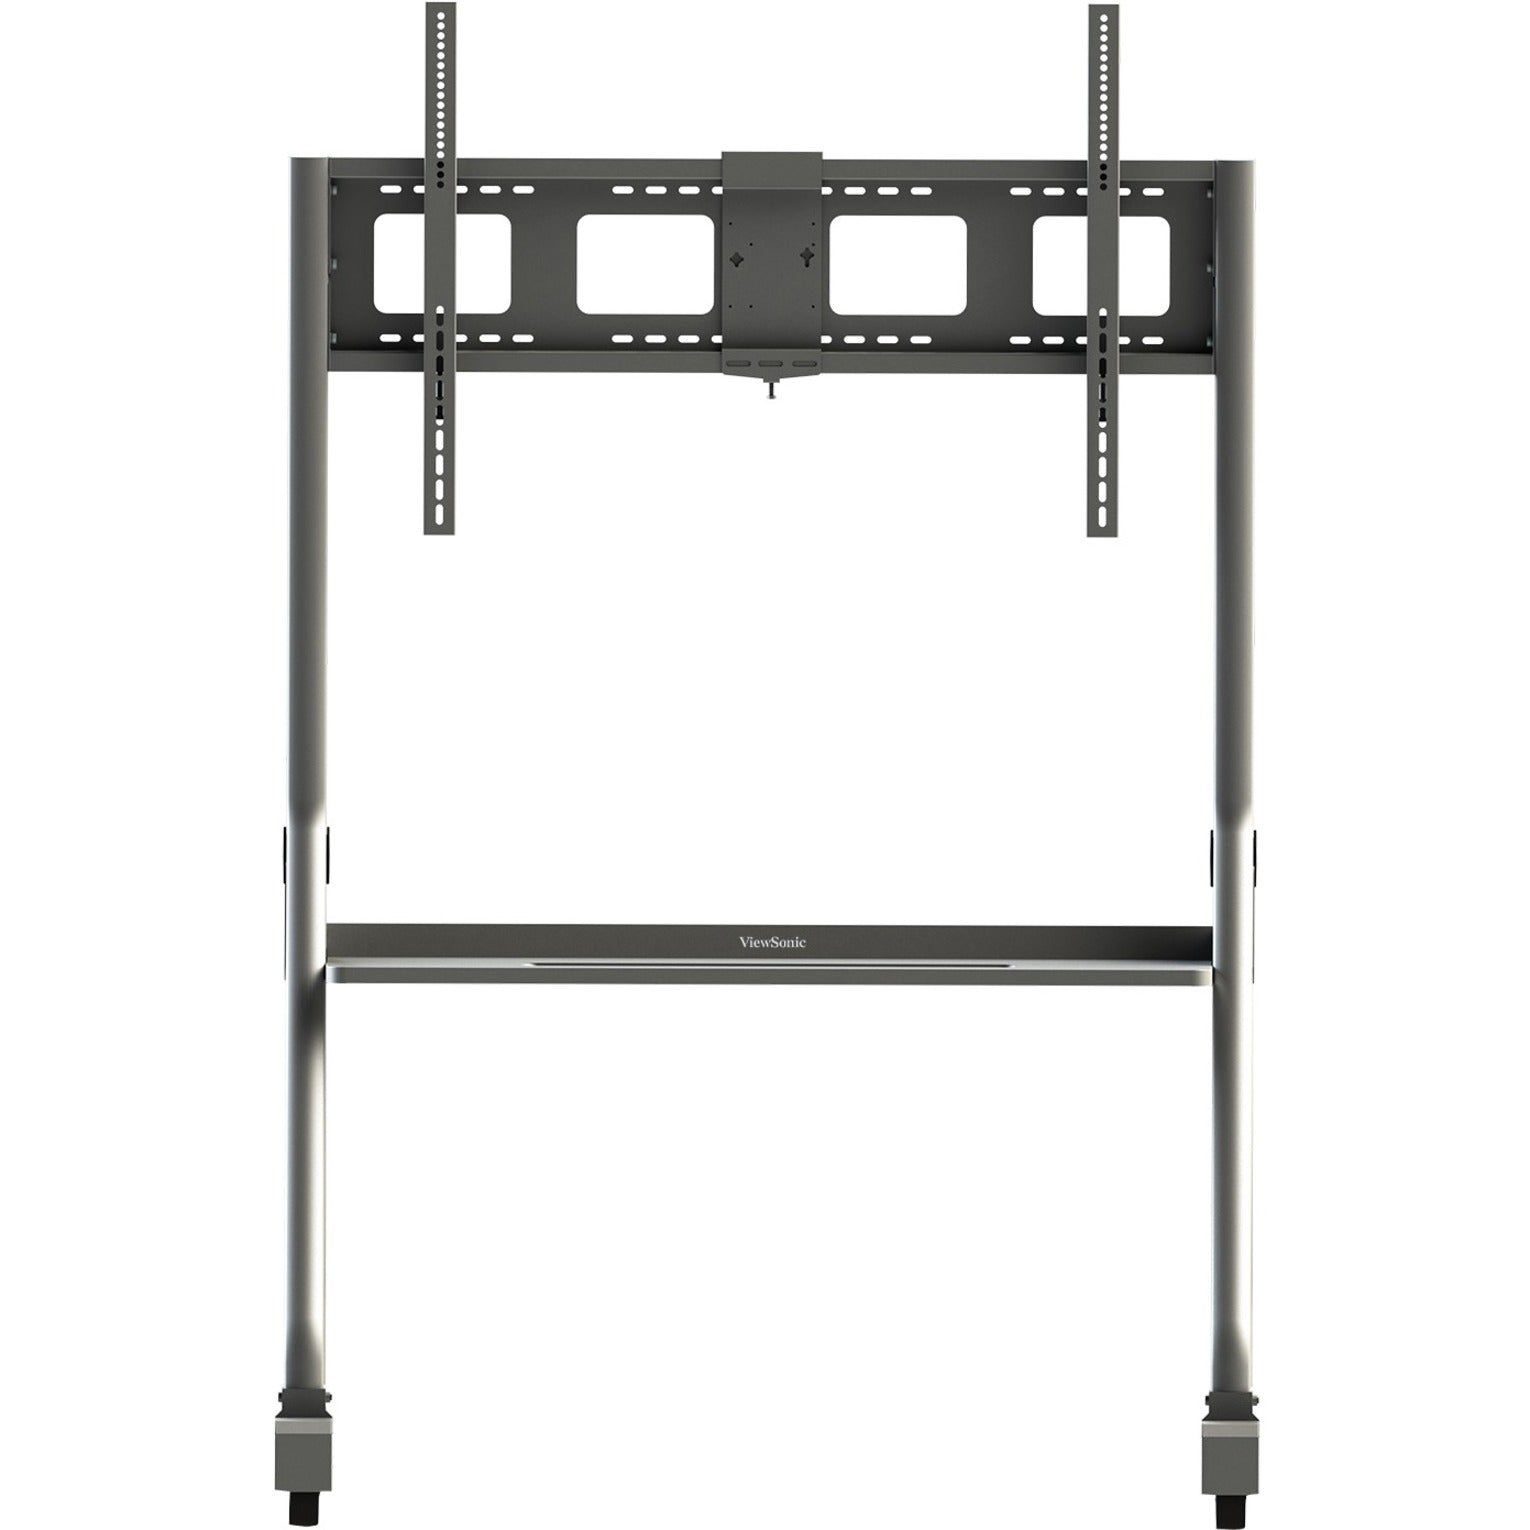 ViewSonic VB-STND-005 Display Stand Slim Trolley Cart, Modern Style, Height Adjustable, 220 lb Maximum Load Capacity